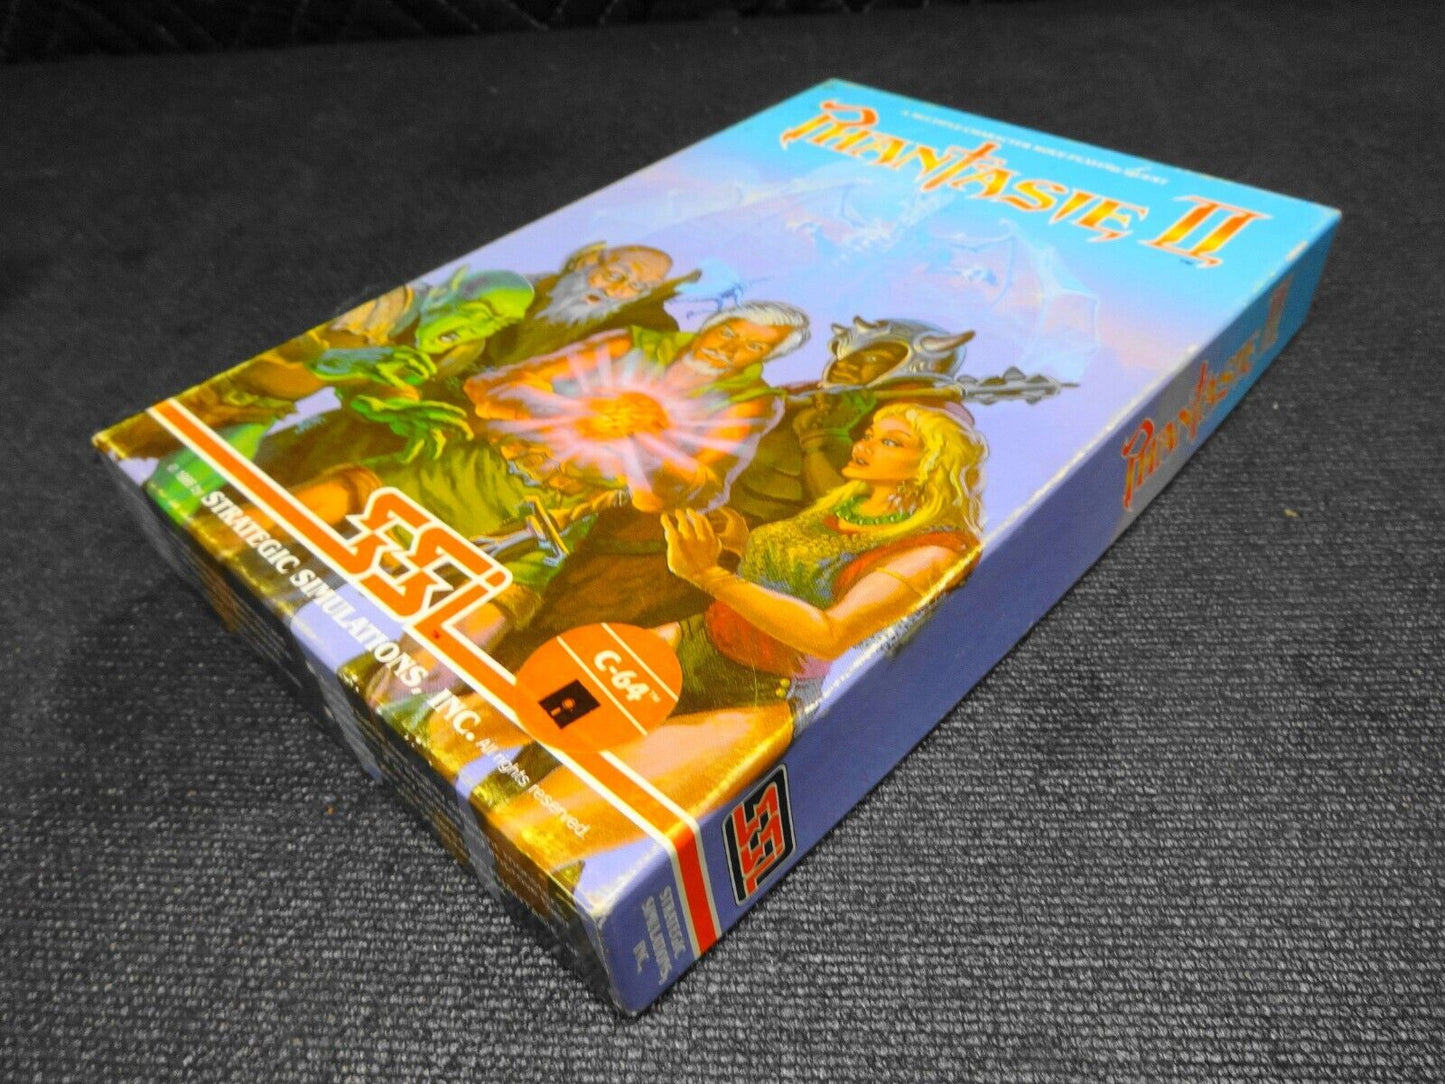 Phantasie II - Commodore 64